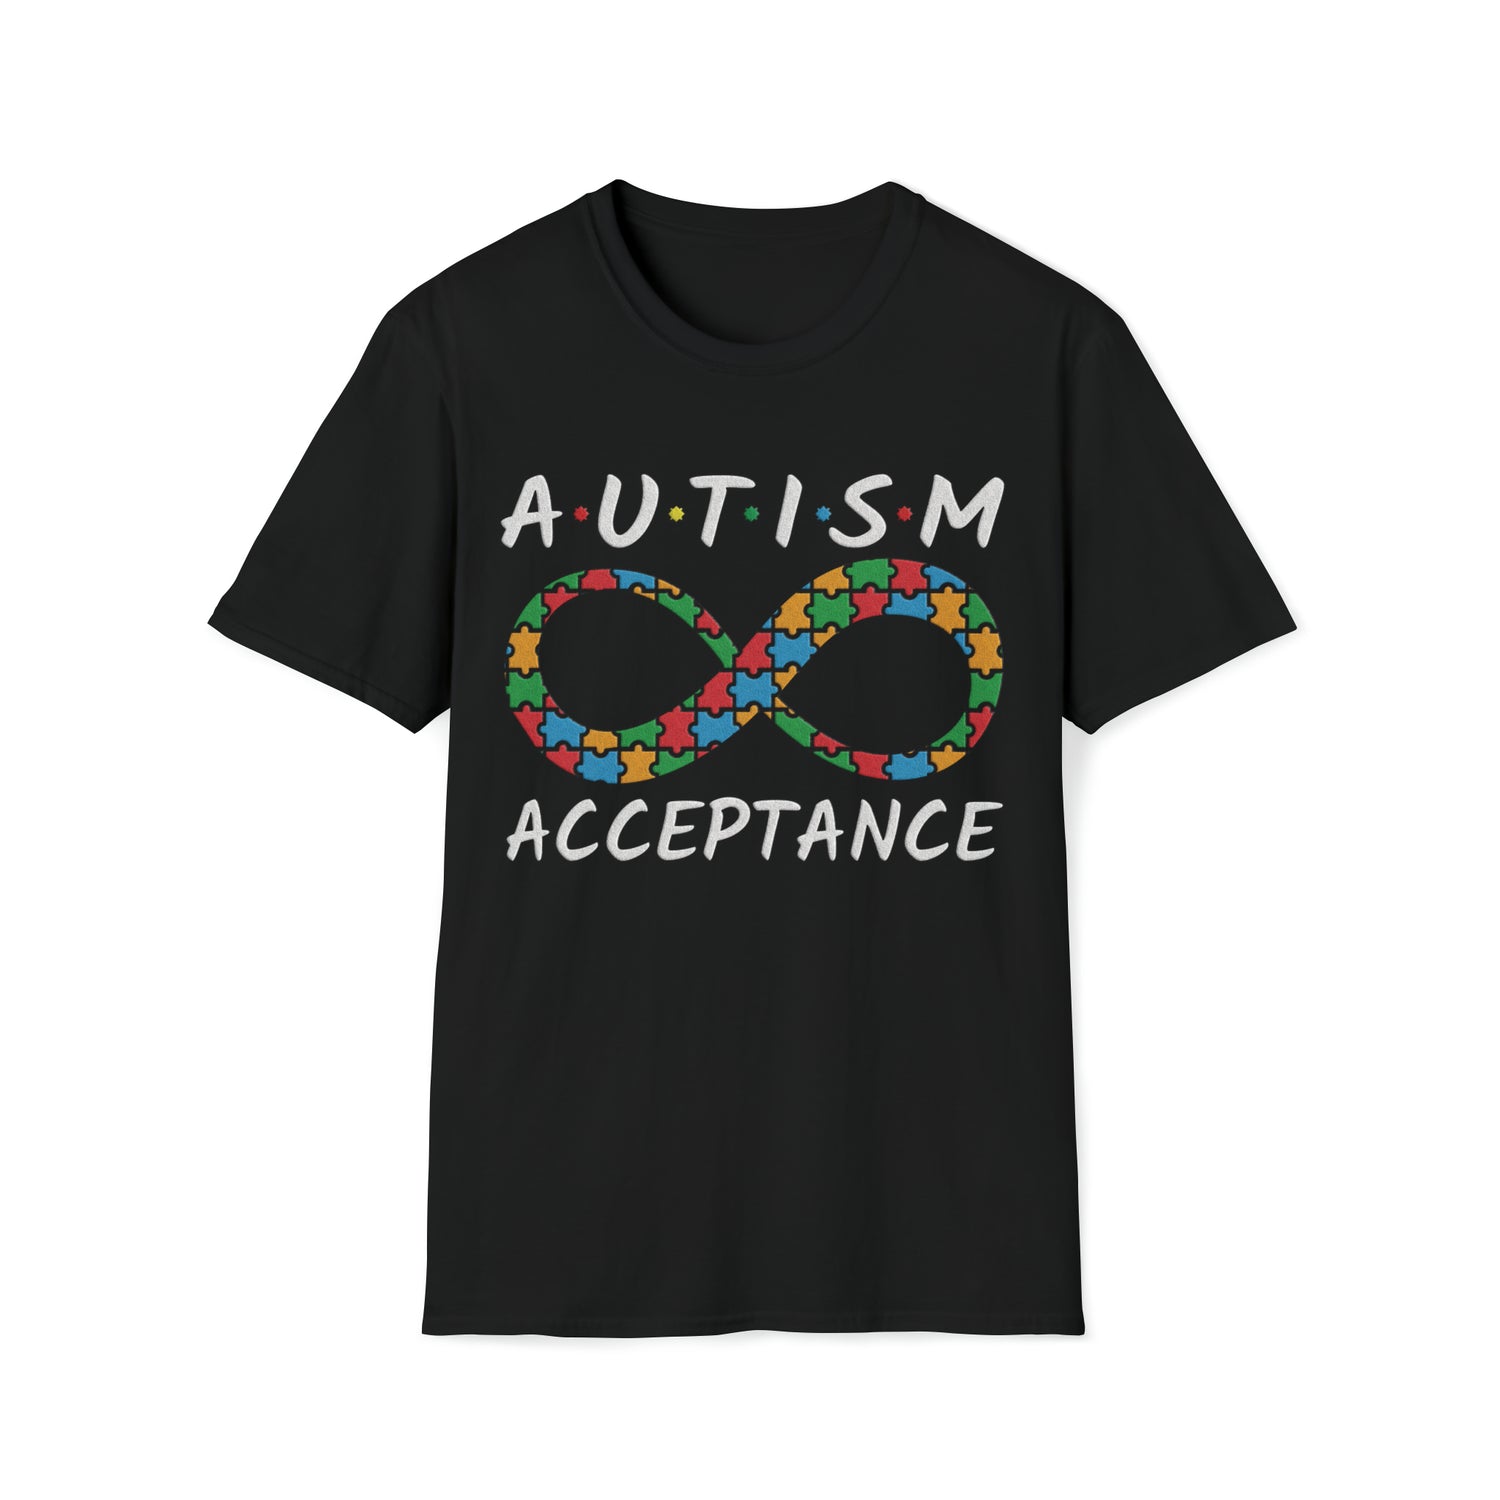 AUTISM ACCEPTANCE - Unisex Softstyle T-Shirt - OCDandApparel